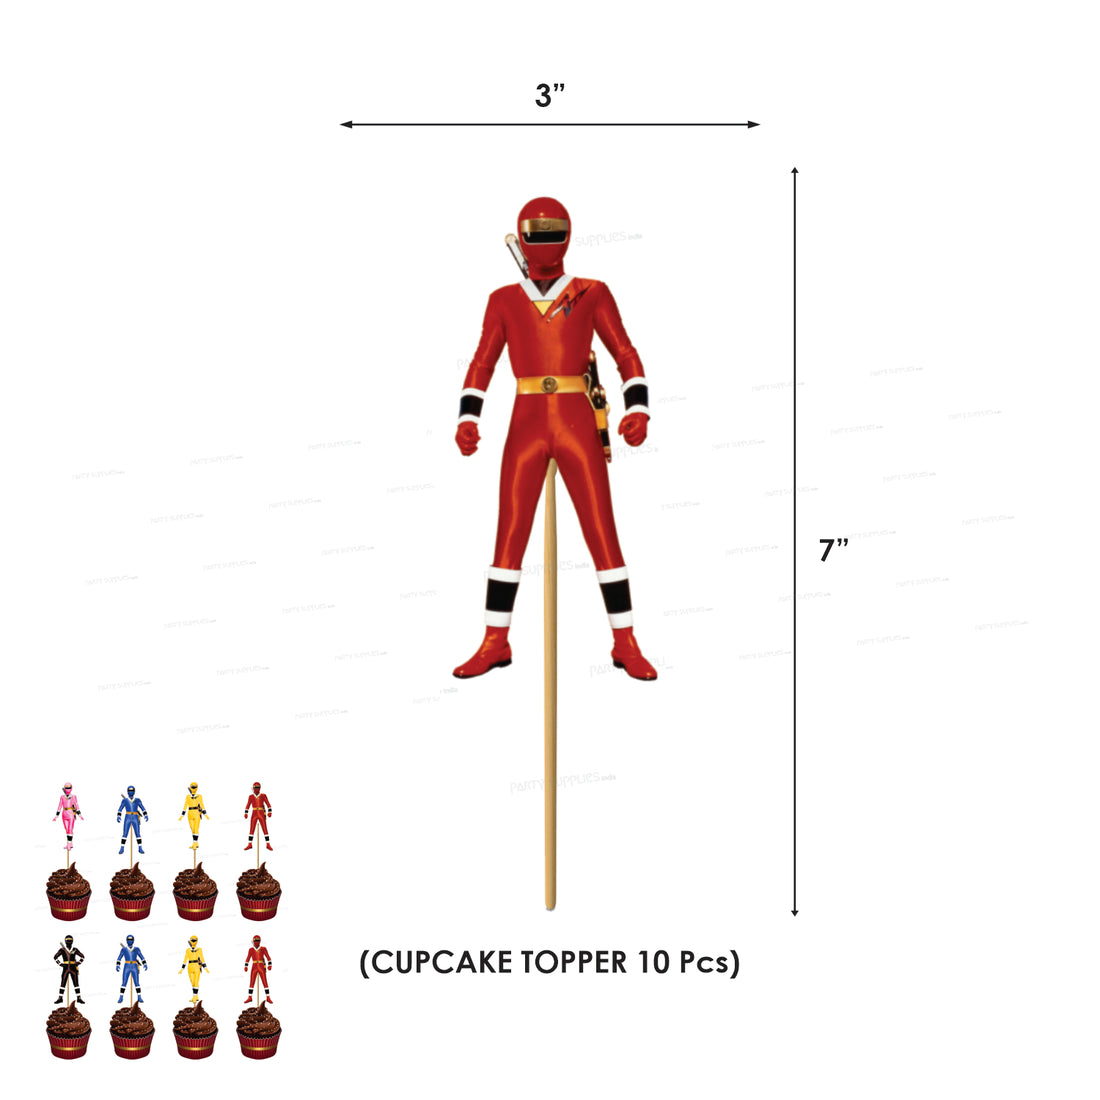 PSI Power Rangers Theme Preferred Combo Kit